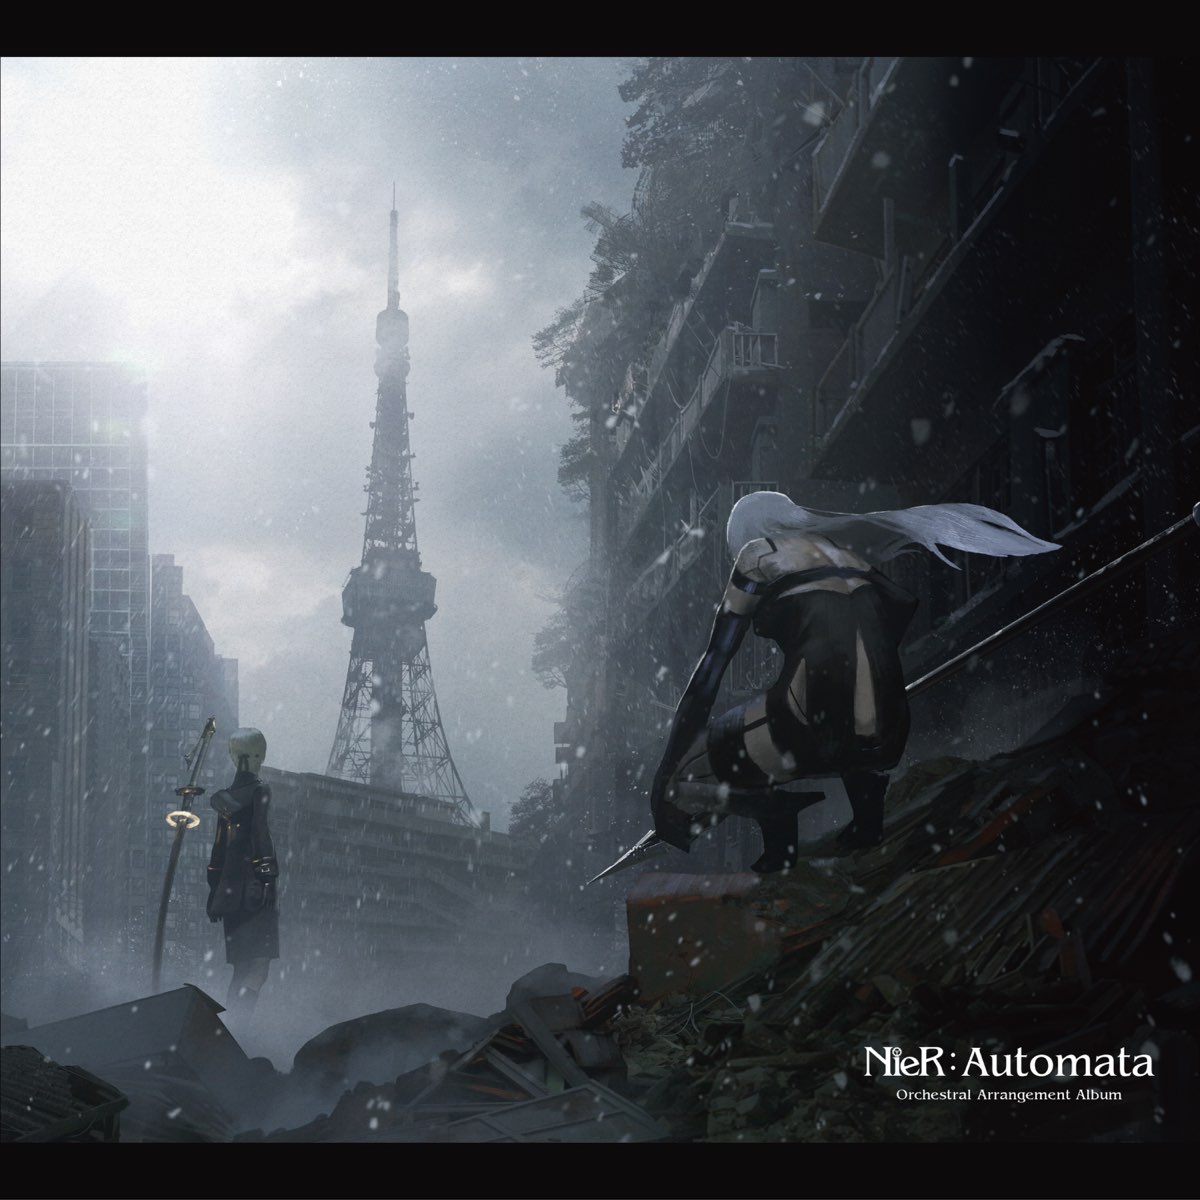 NieR:Automata Orchestral Arrangement Album by Keiichi Okabe on iTunes